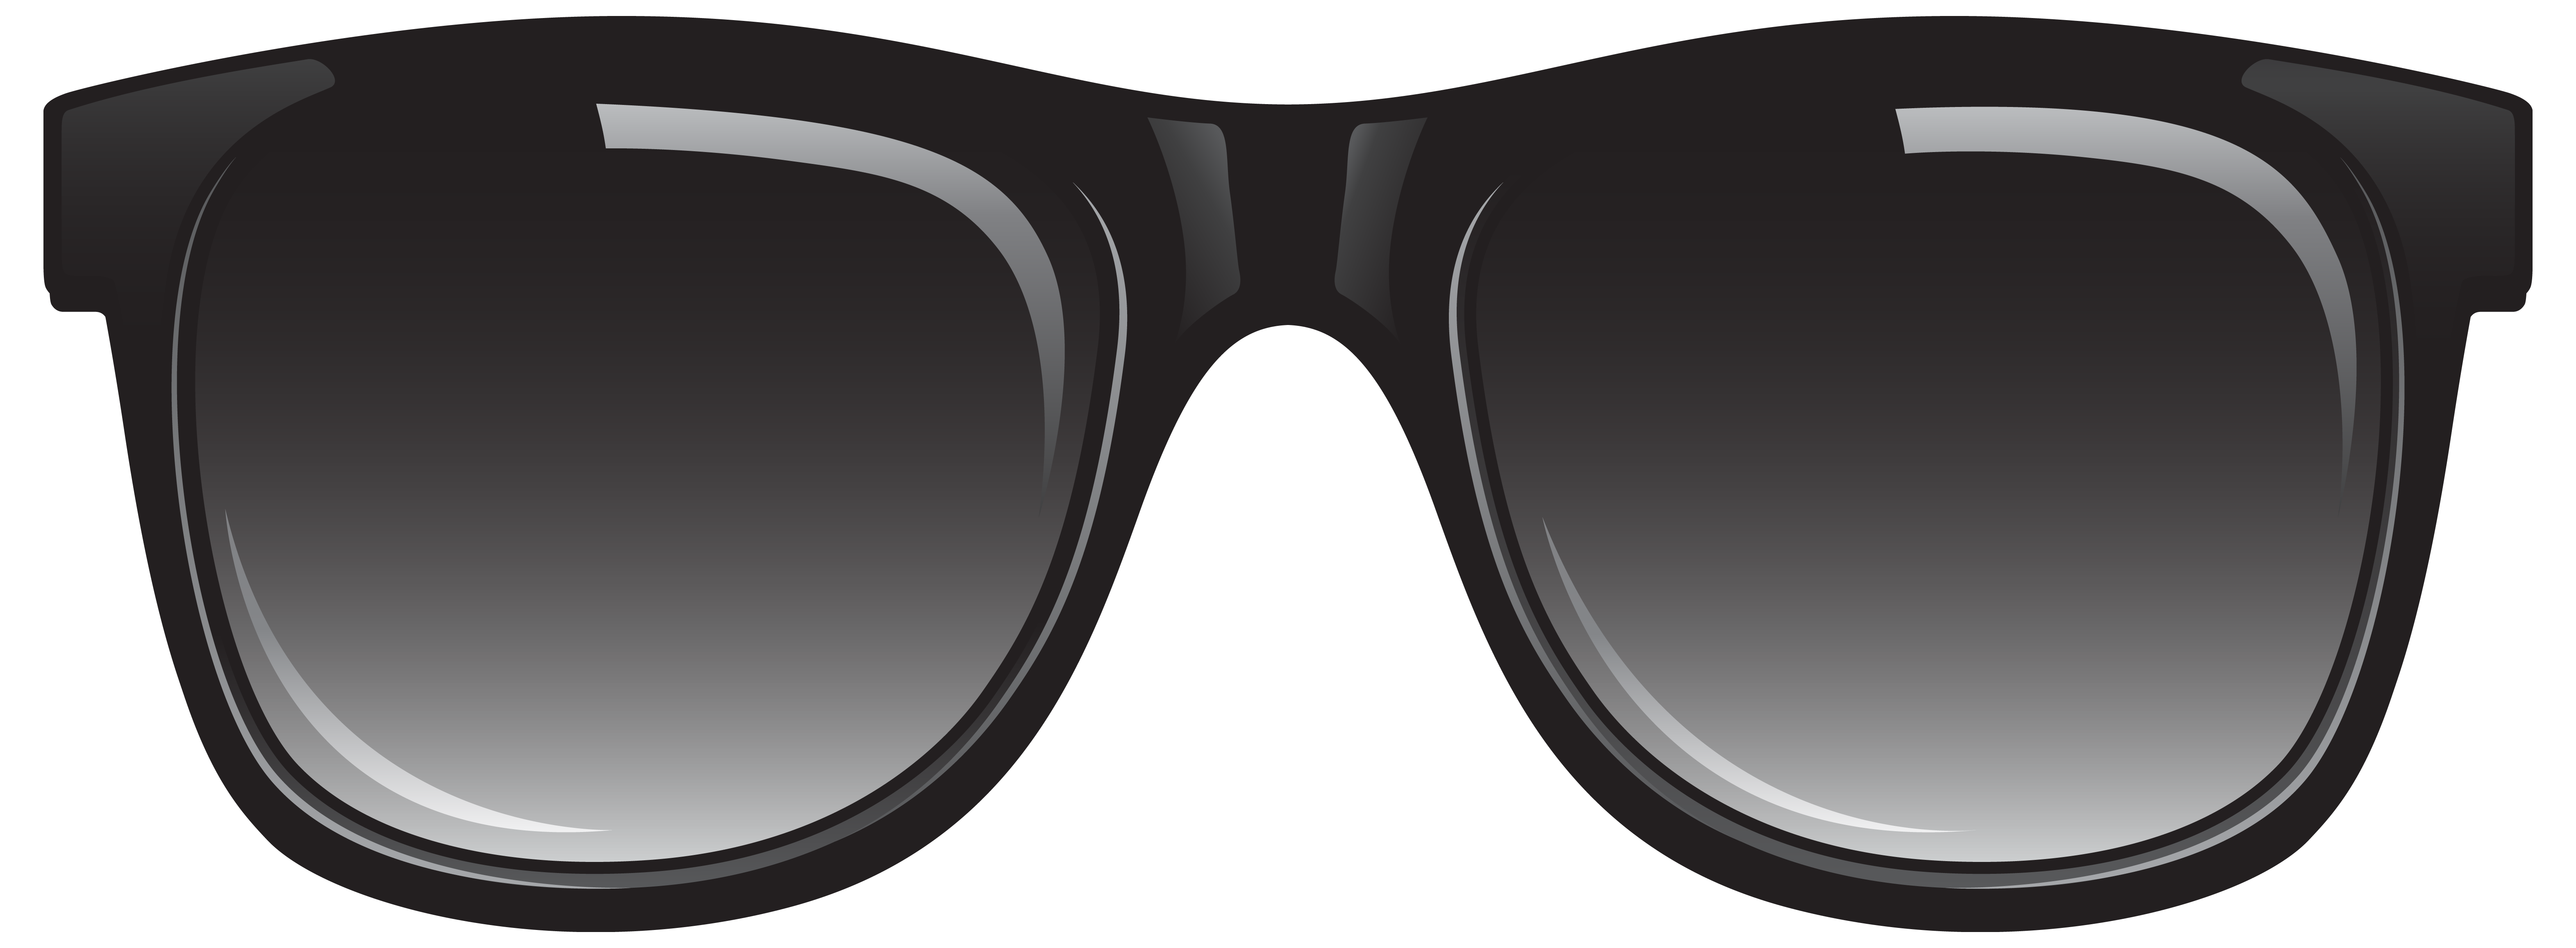 Black sunglasses png image. Vision clipart optical